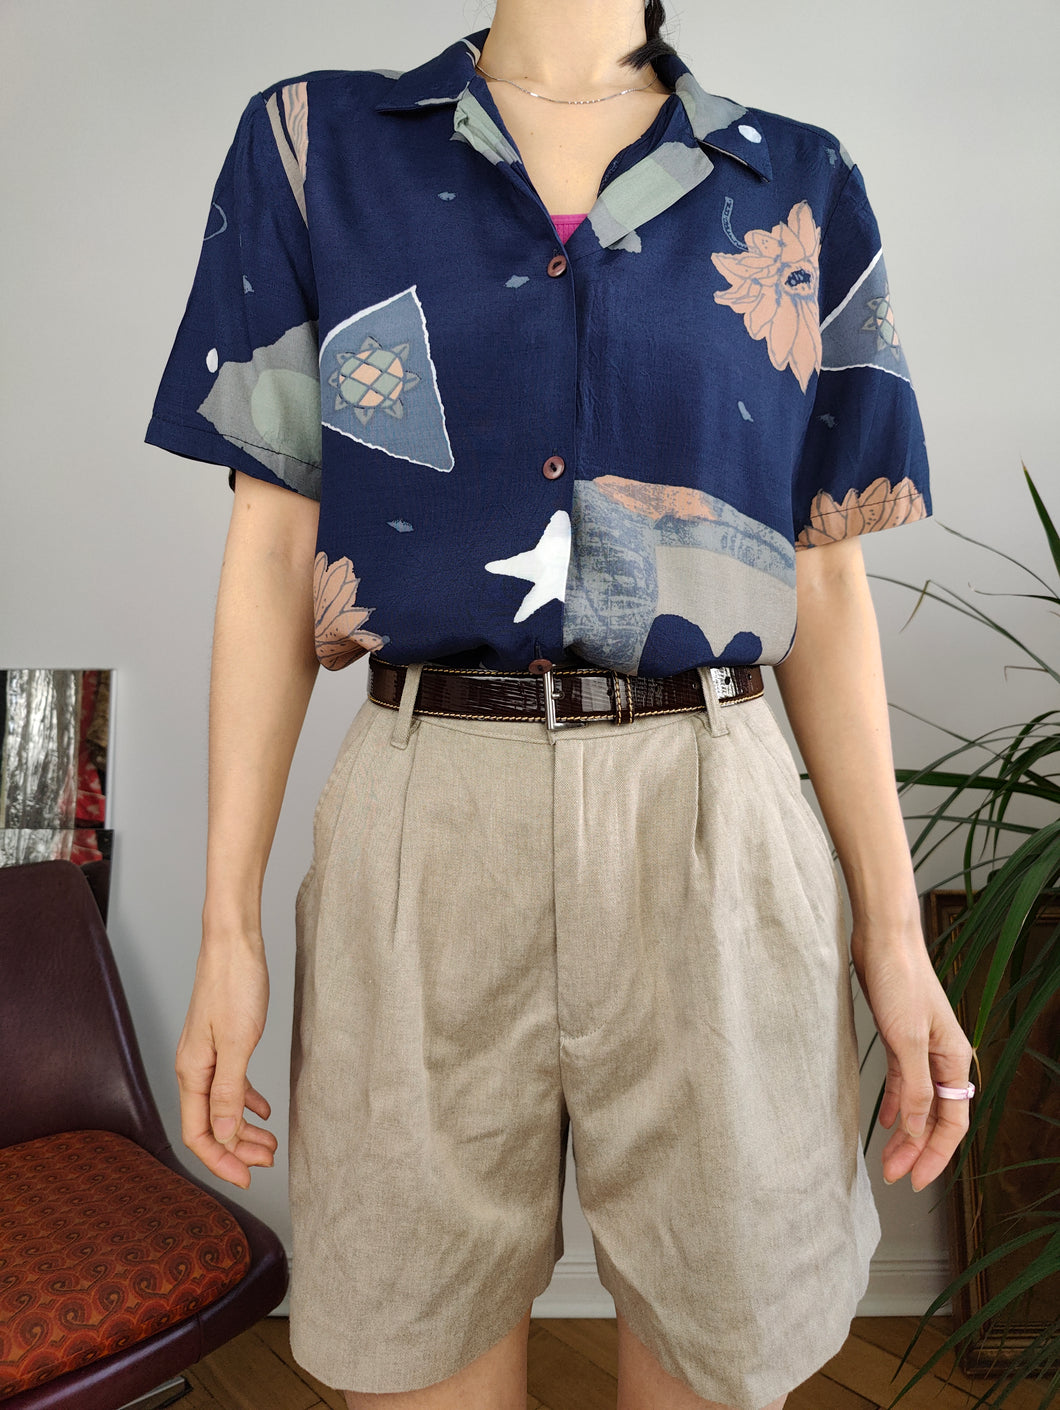 Vintage viscose shirt blouse crazy art print pattern navy blue heart short sleeve women S-M